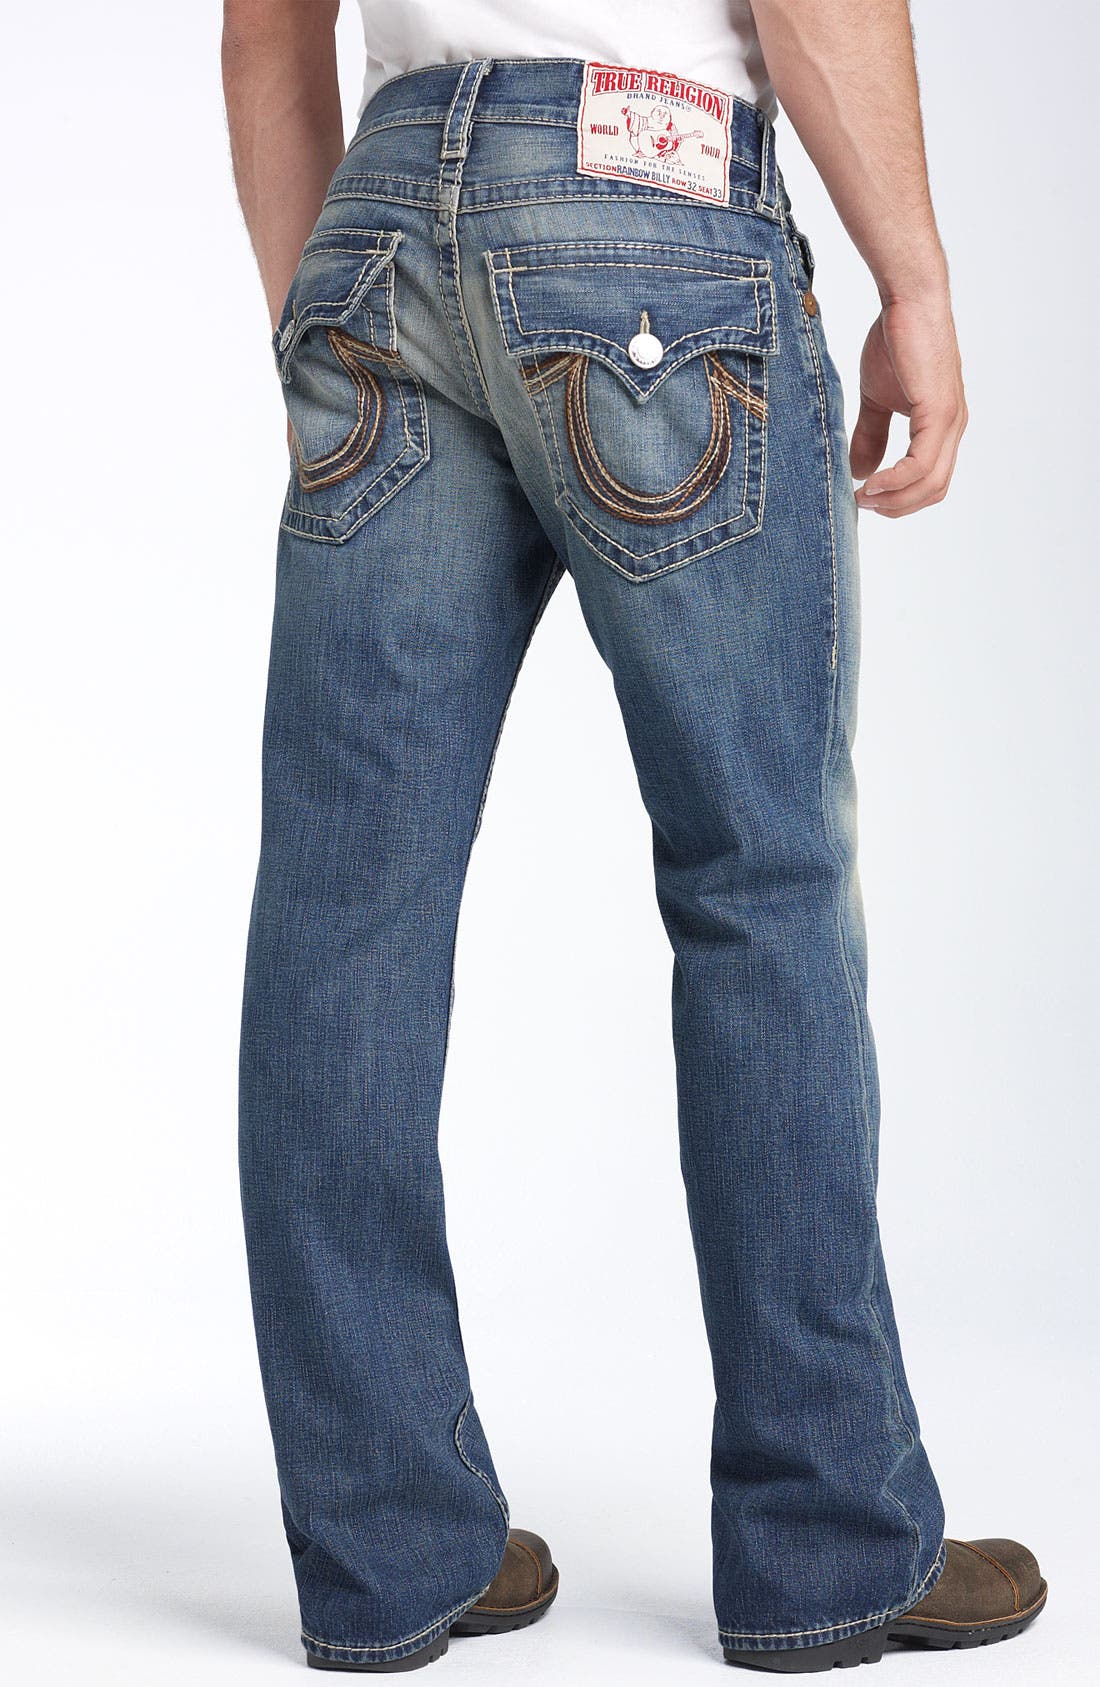 true religion jeans canada